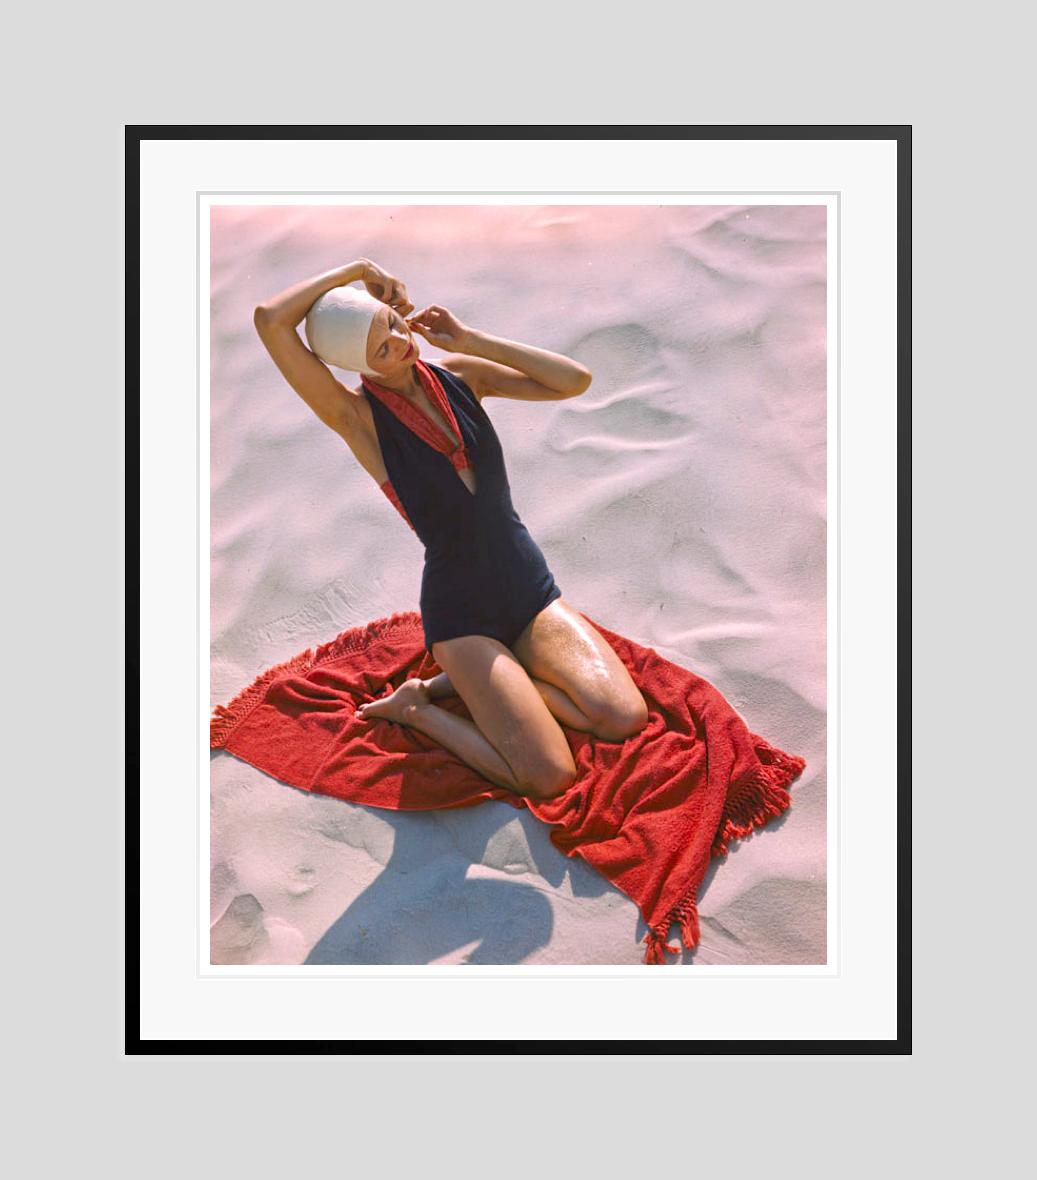 Girl On The Beach 

1947

Beachwear fashion shoot

by Toni Frissell

40 x 30